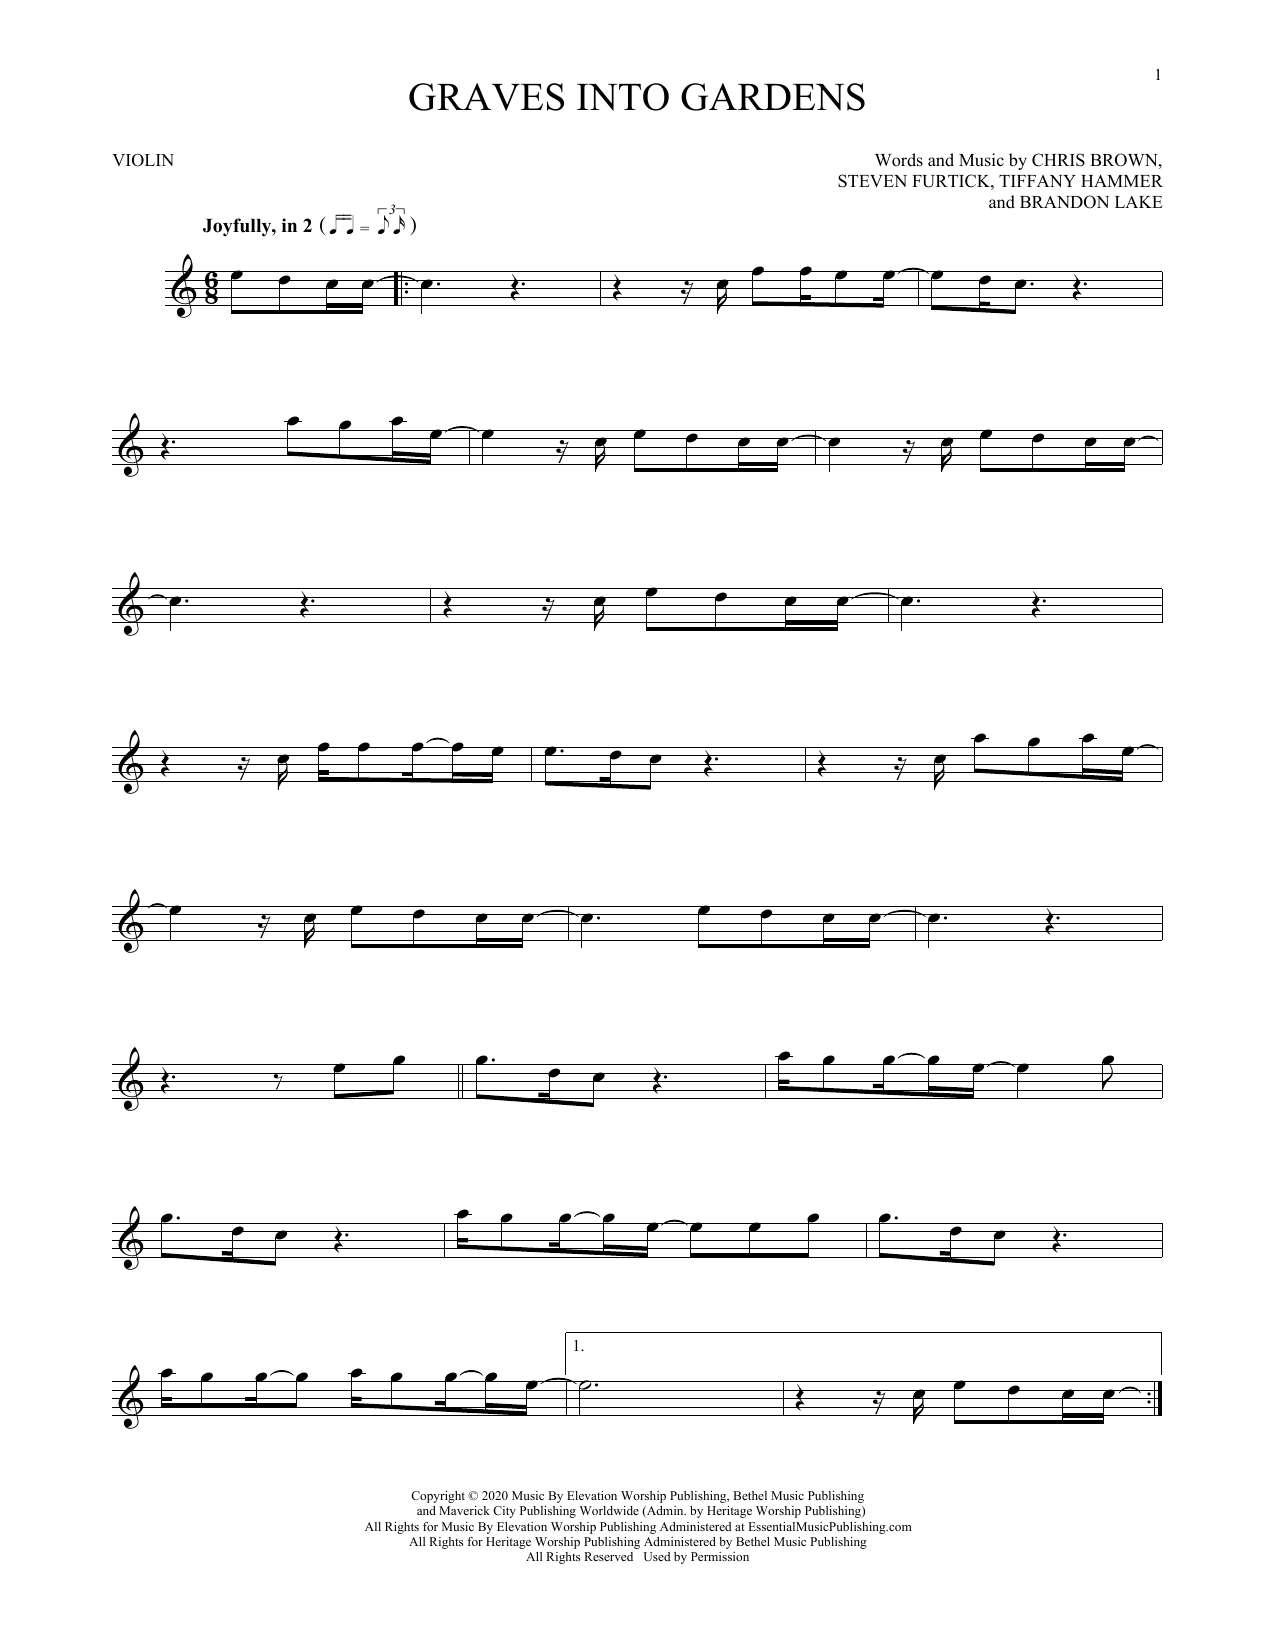 Elevation Worship Graves Into Gardens sheet music notes printable PDF score